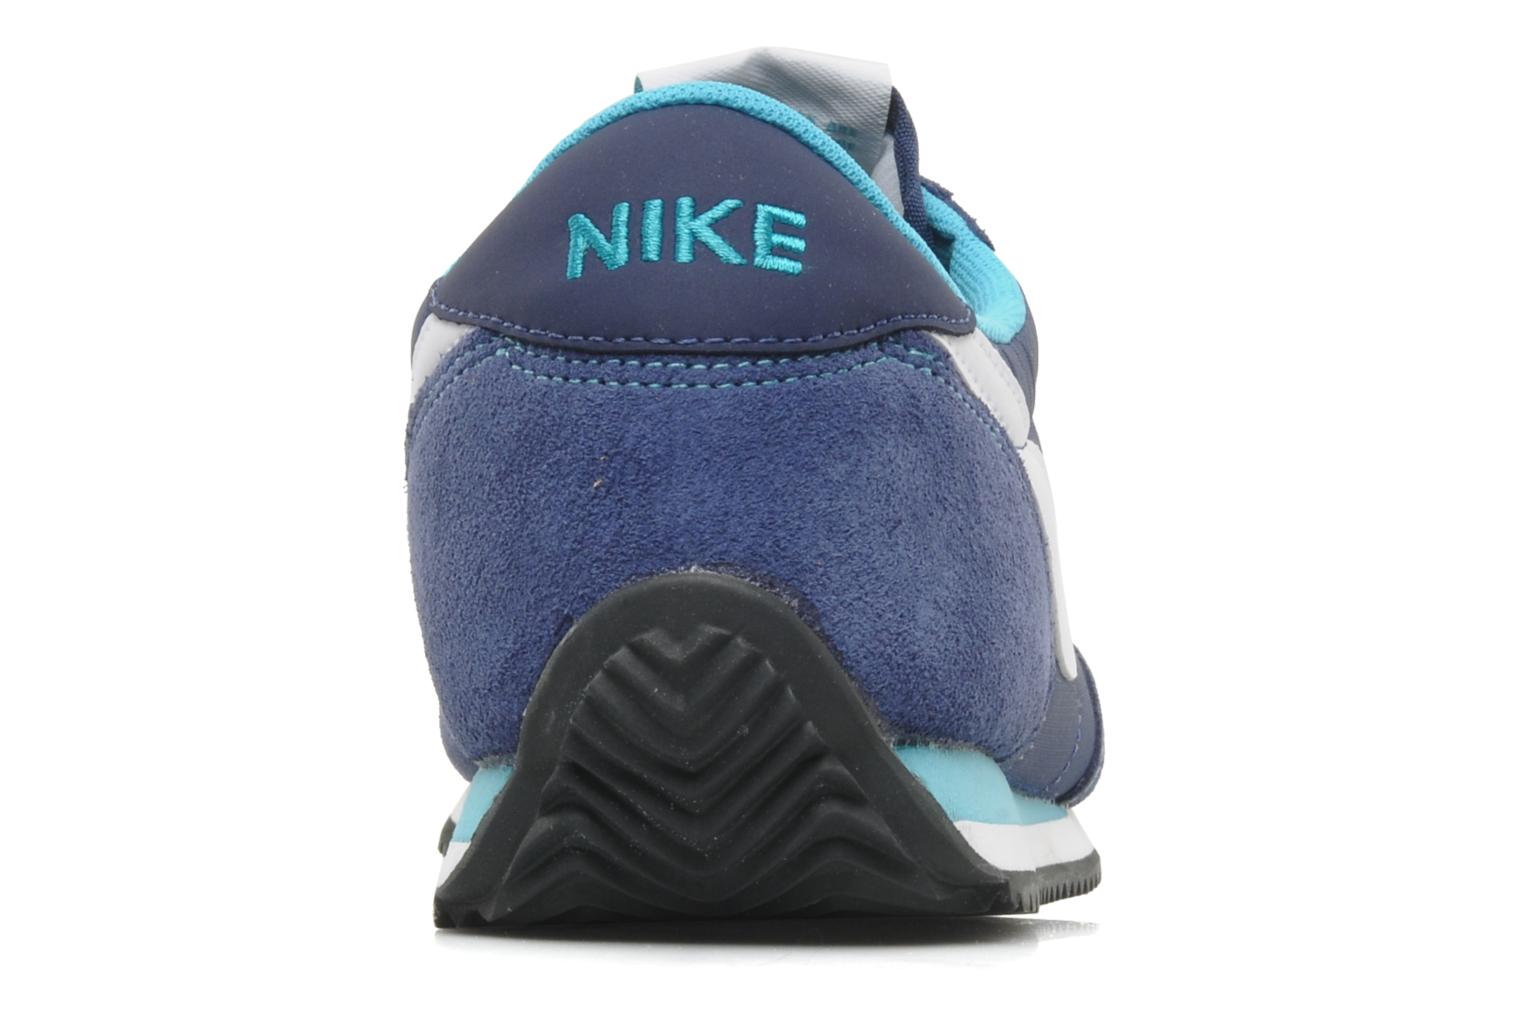 Nike Wmns oceania (Bleu) - Baskets chez Sarenza (75567)